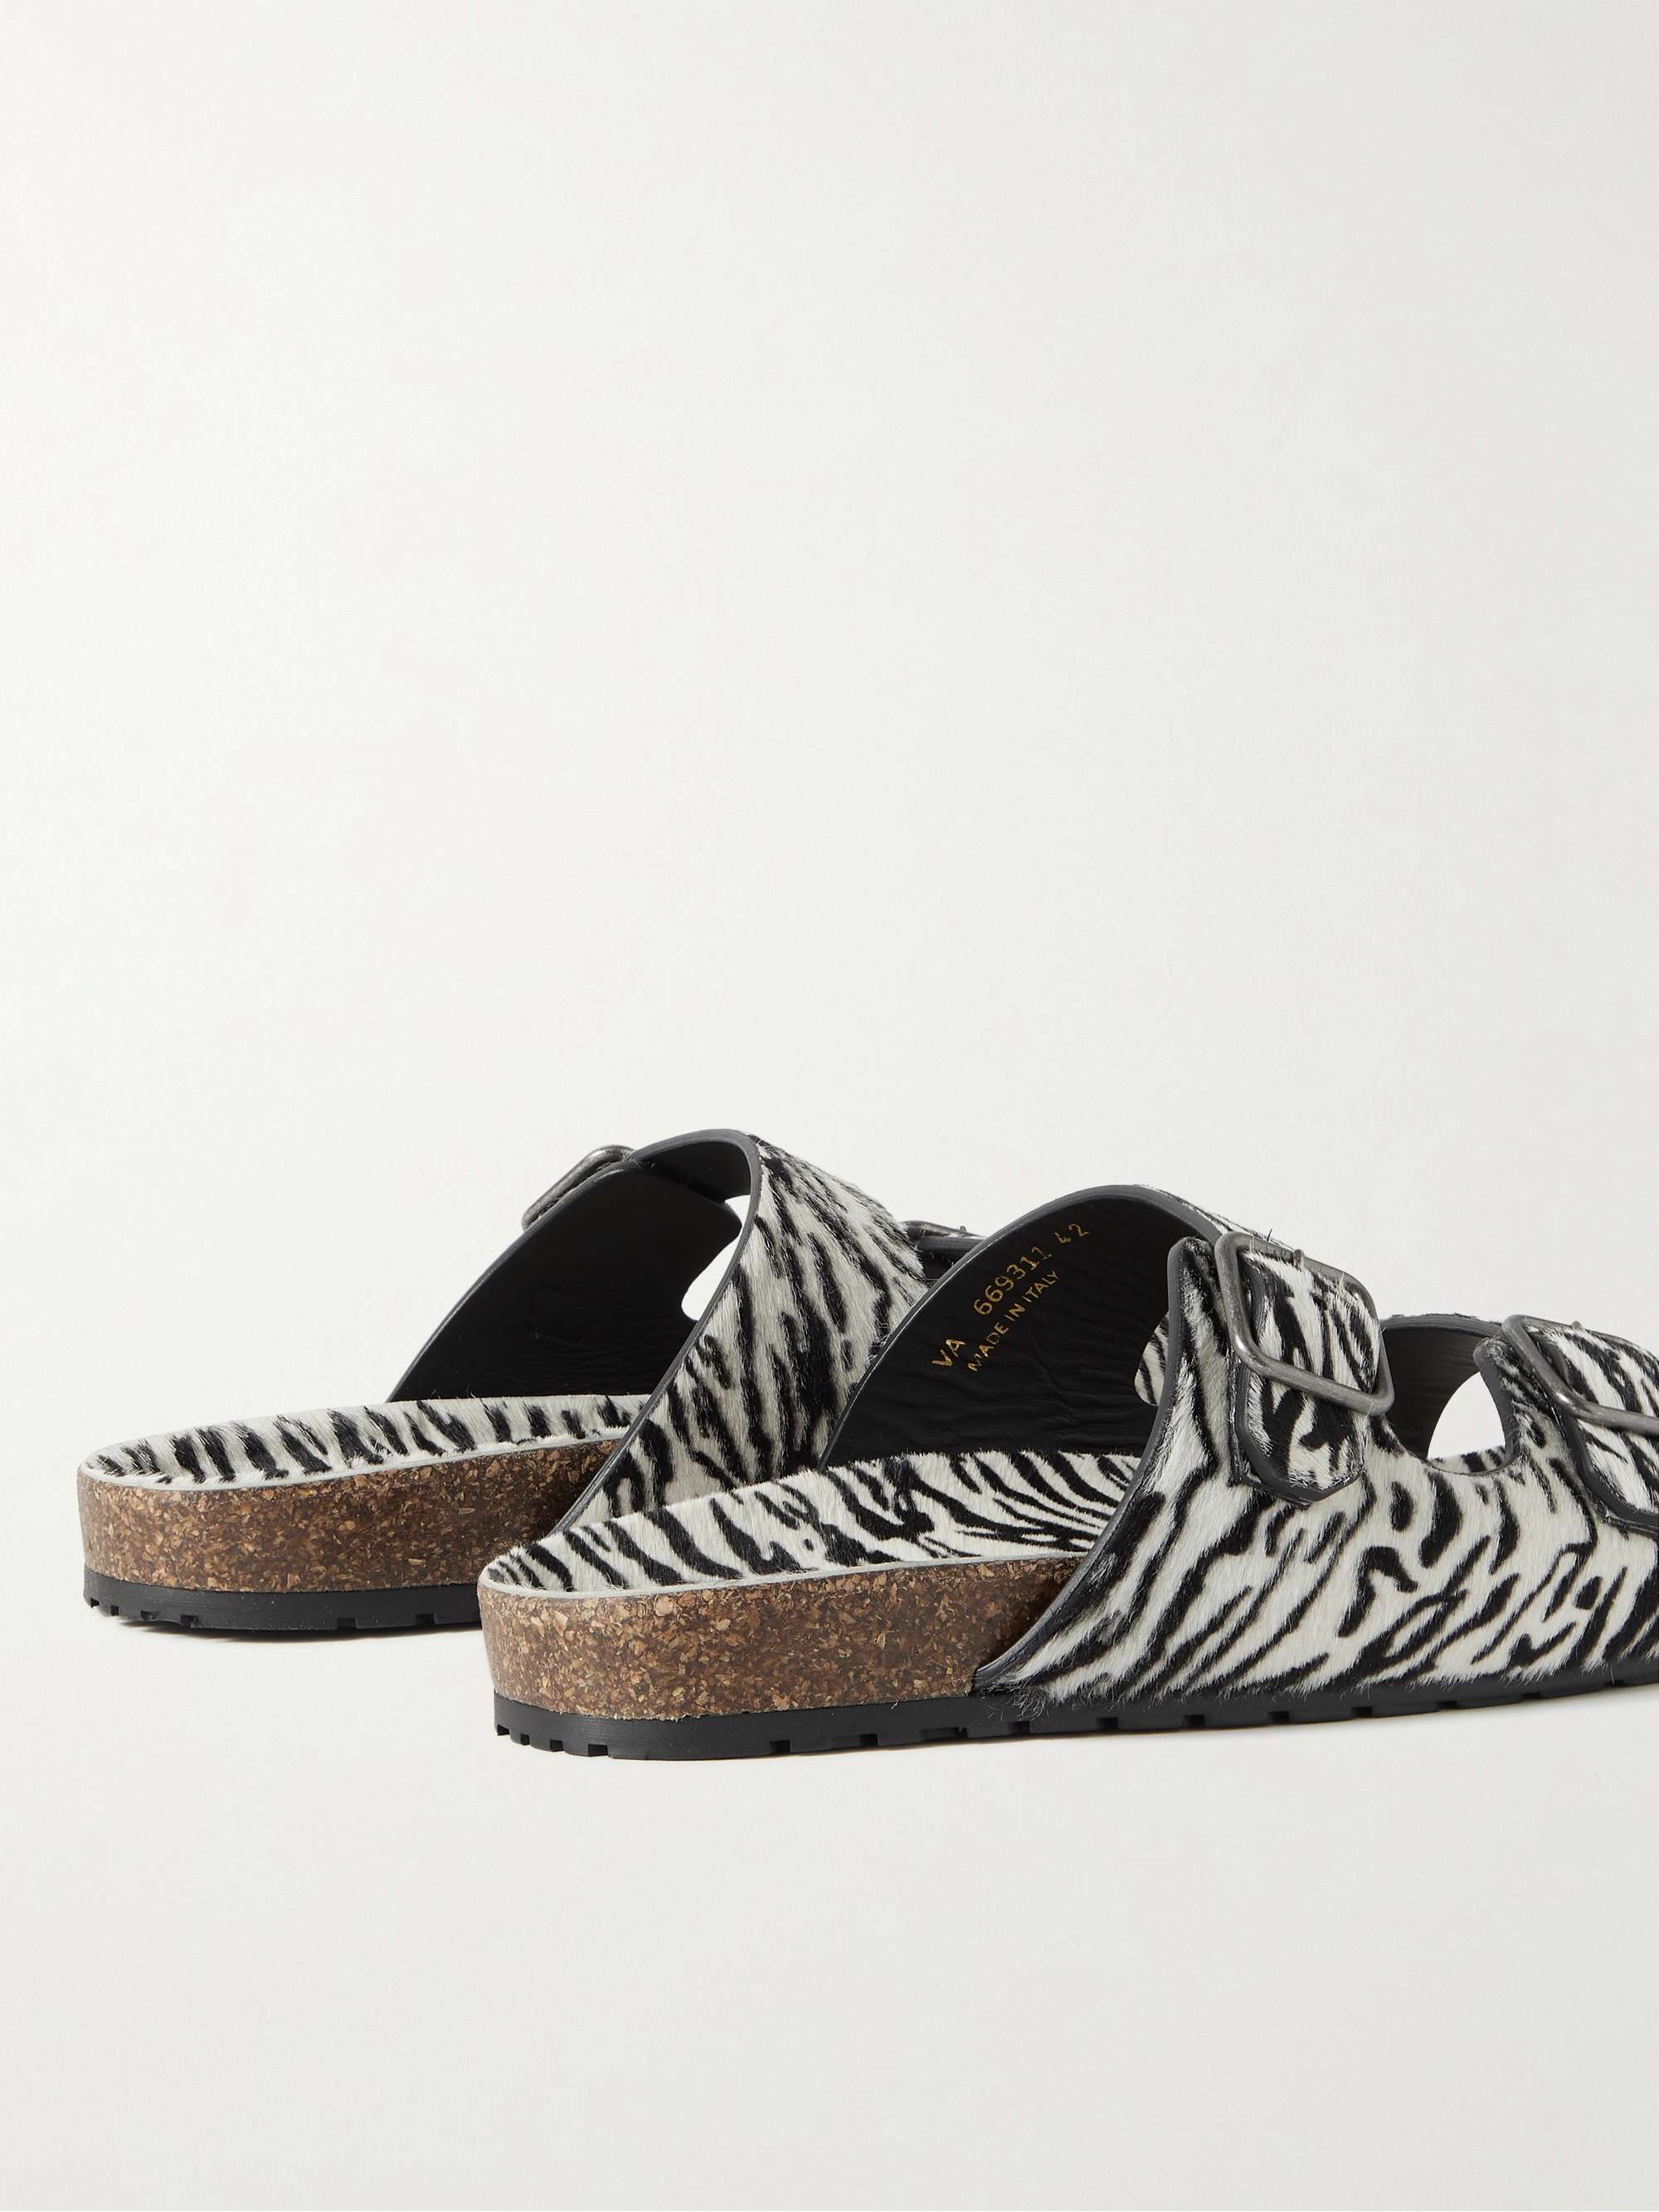 SAINT LAURENT Jimmy Zebra-Print Calf Hair Sandals